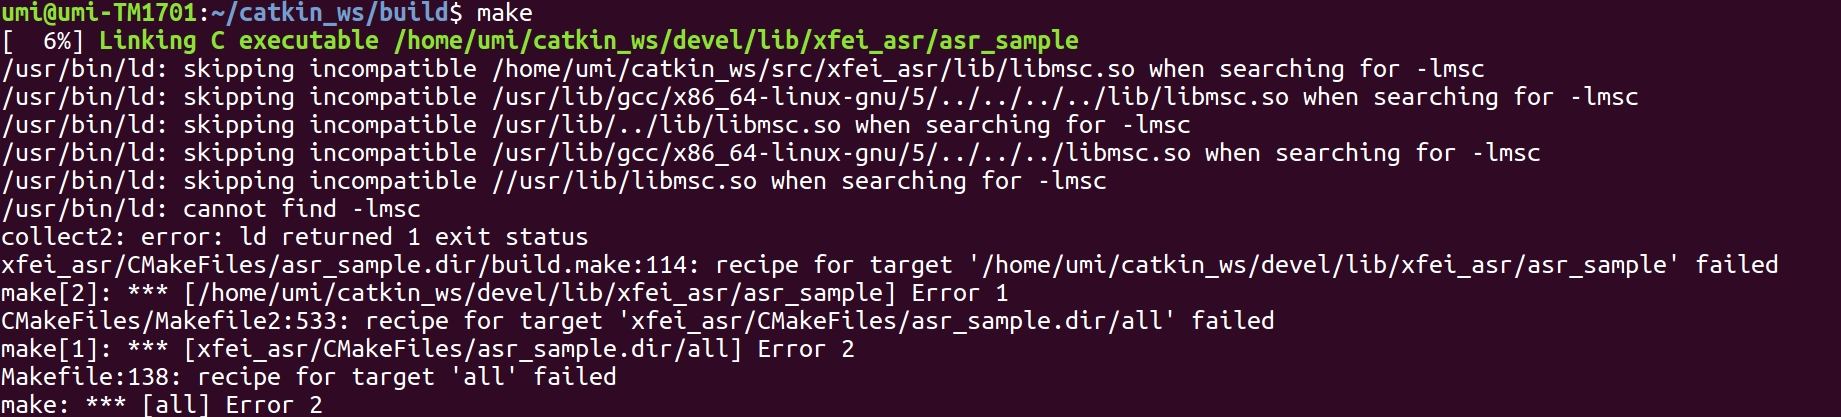 【ROS】科大讯飞语音SDK+Ubuntu16.04 + kinetic 实践报错记录及解决方案（1）：cannot find -lmsc